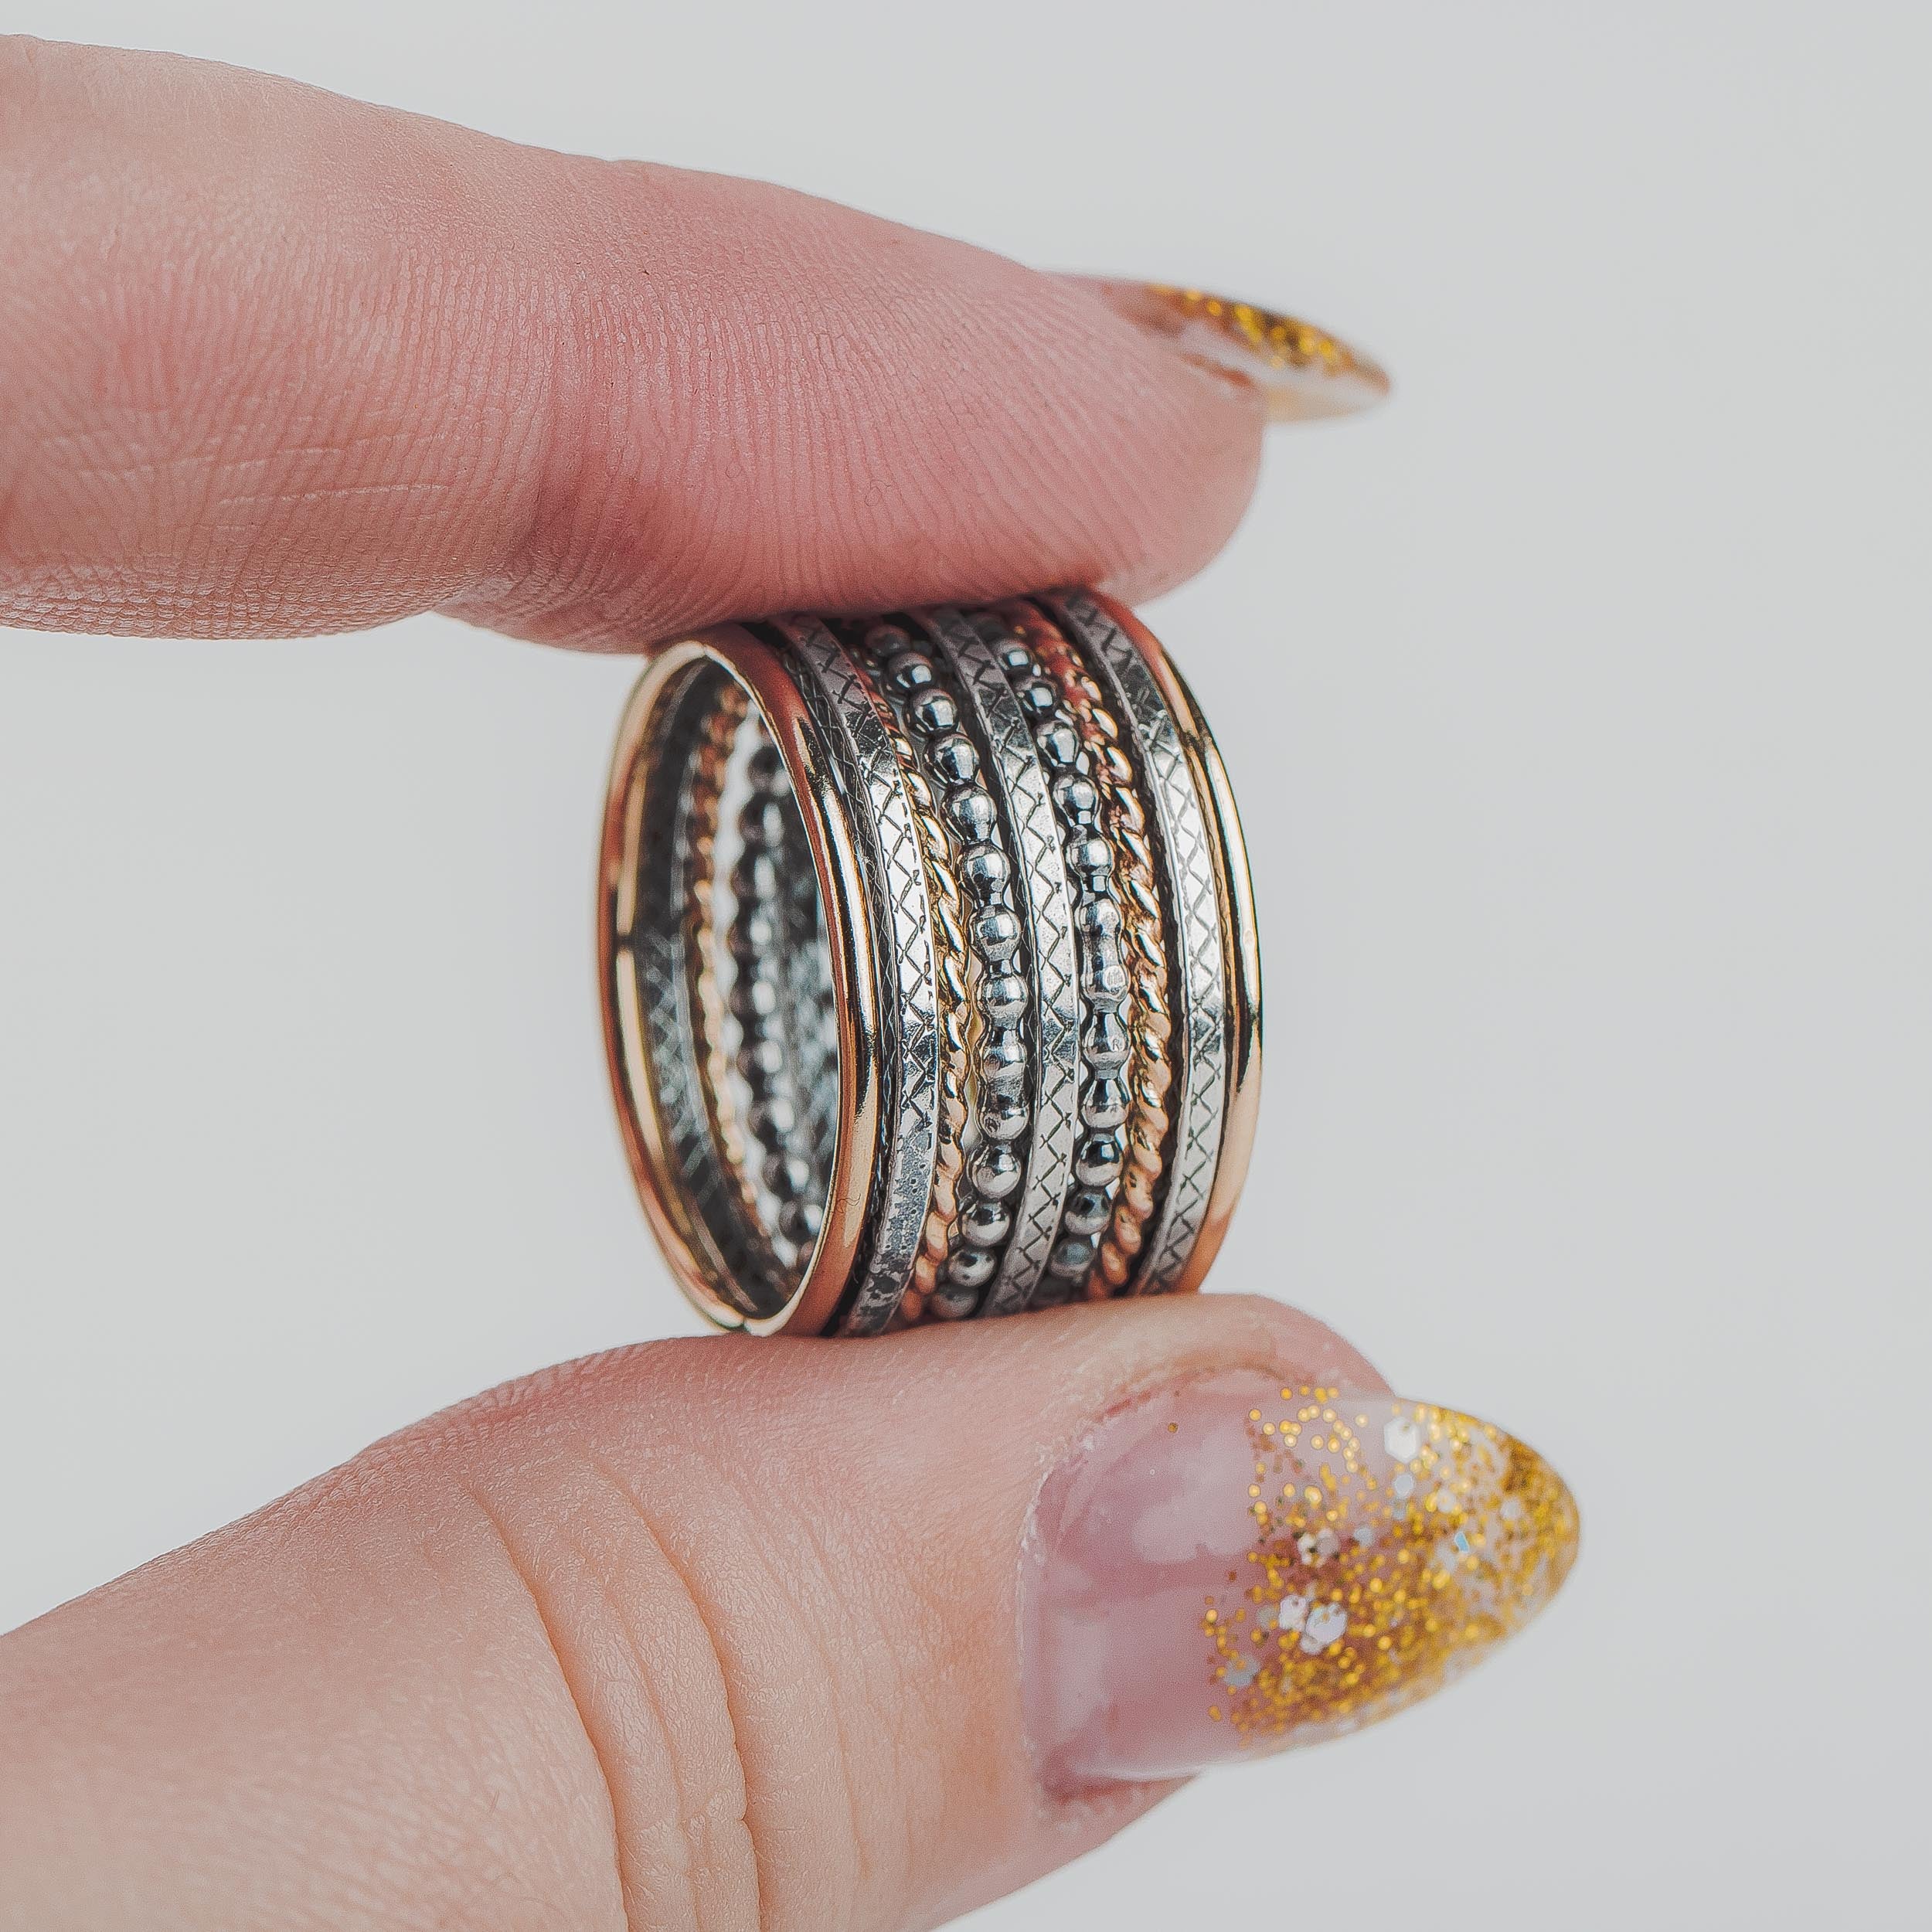 The Nova Stack - Melanie Golden Jewelry - _badge_BESTSELLER, bestseller, mixed metal, rings, stacking rings